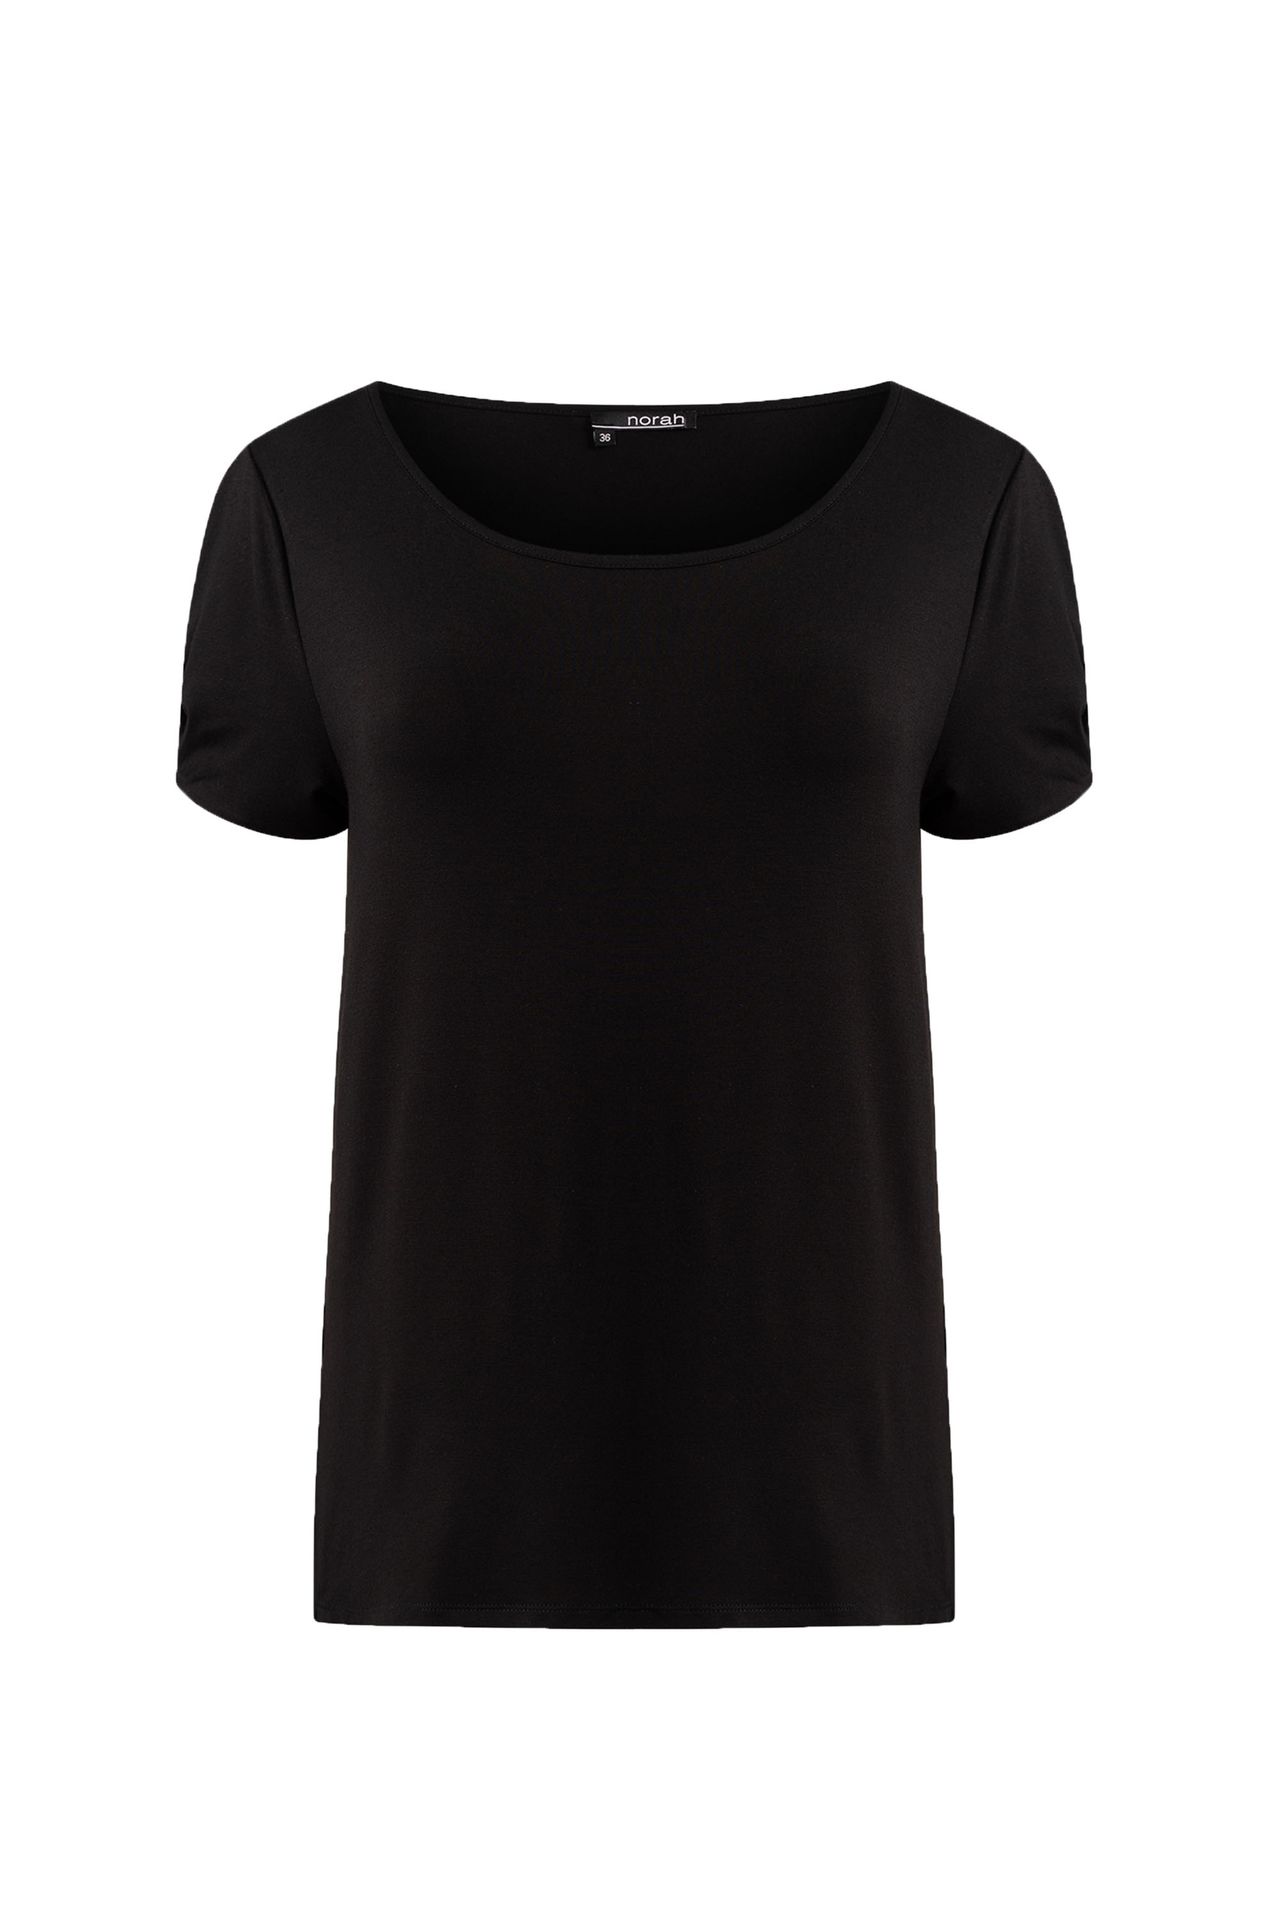 Norah Shirt zwart black 210216-001